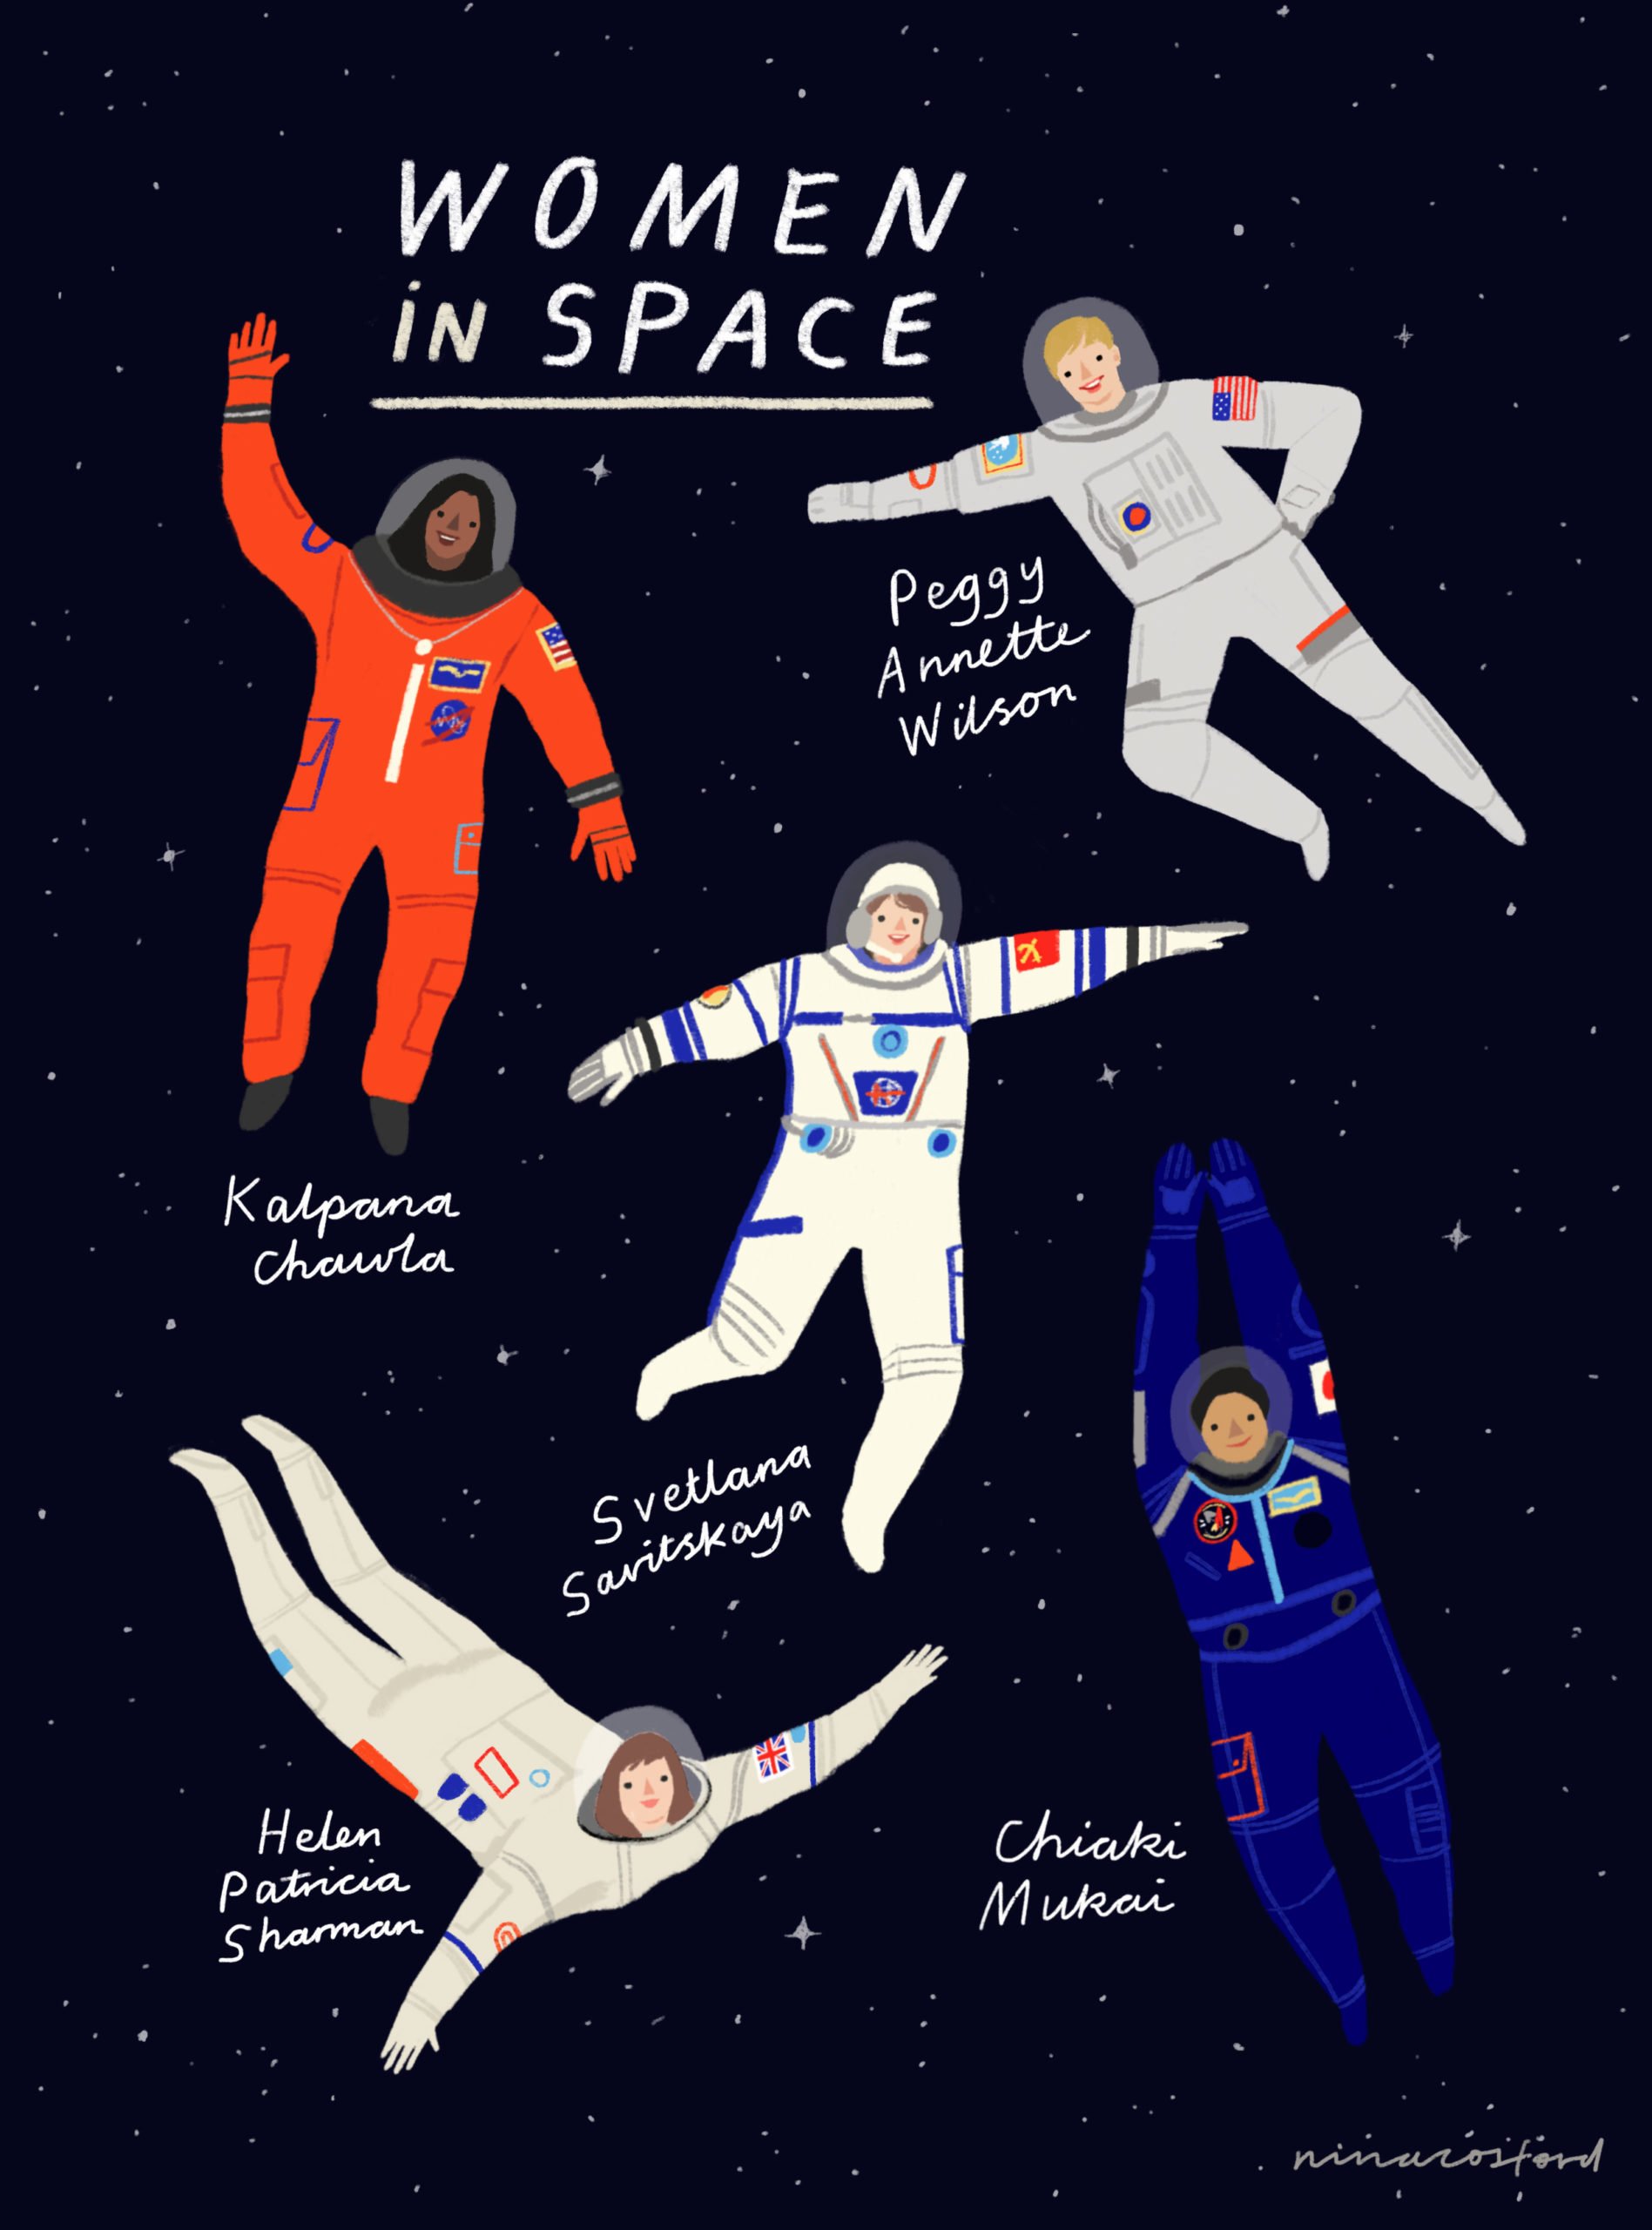 WOMEN-IN-SPACE_1-1-scaled.jpg